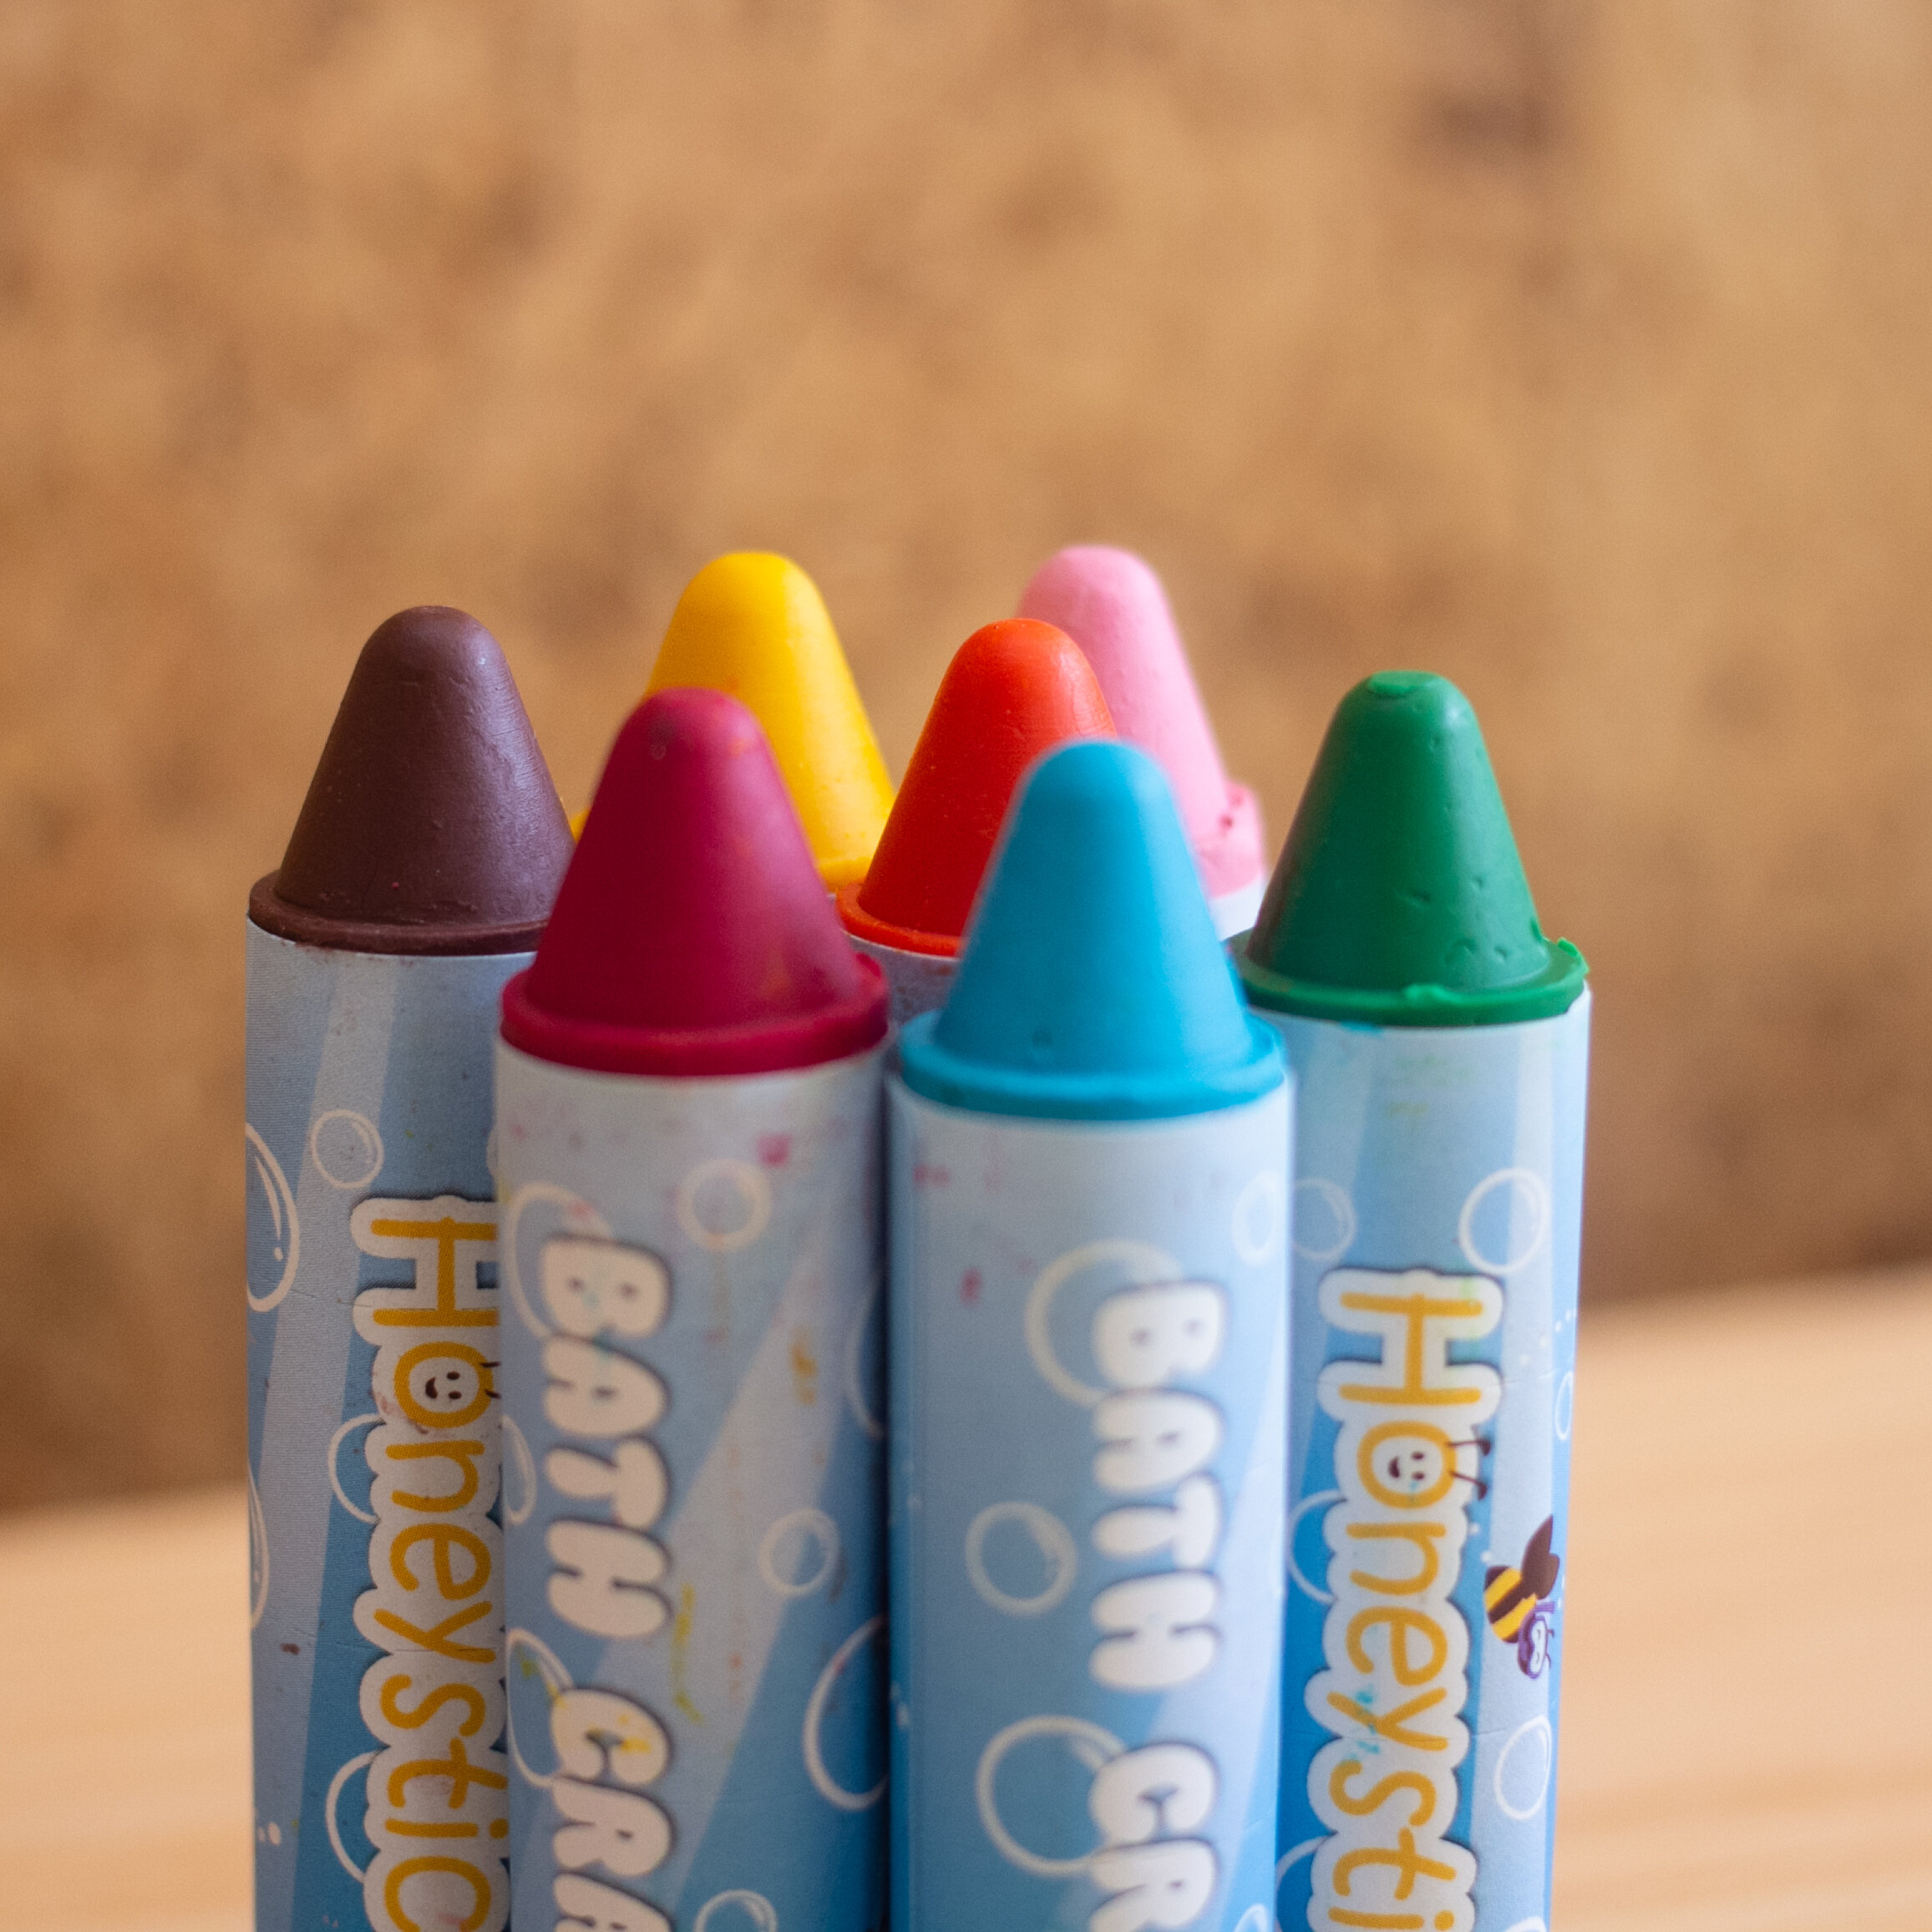 Honeysticks, Auckland, NZ: Non-toxic crayons - My Red Palette